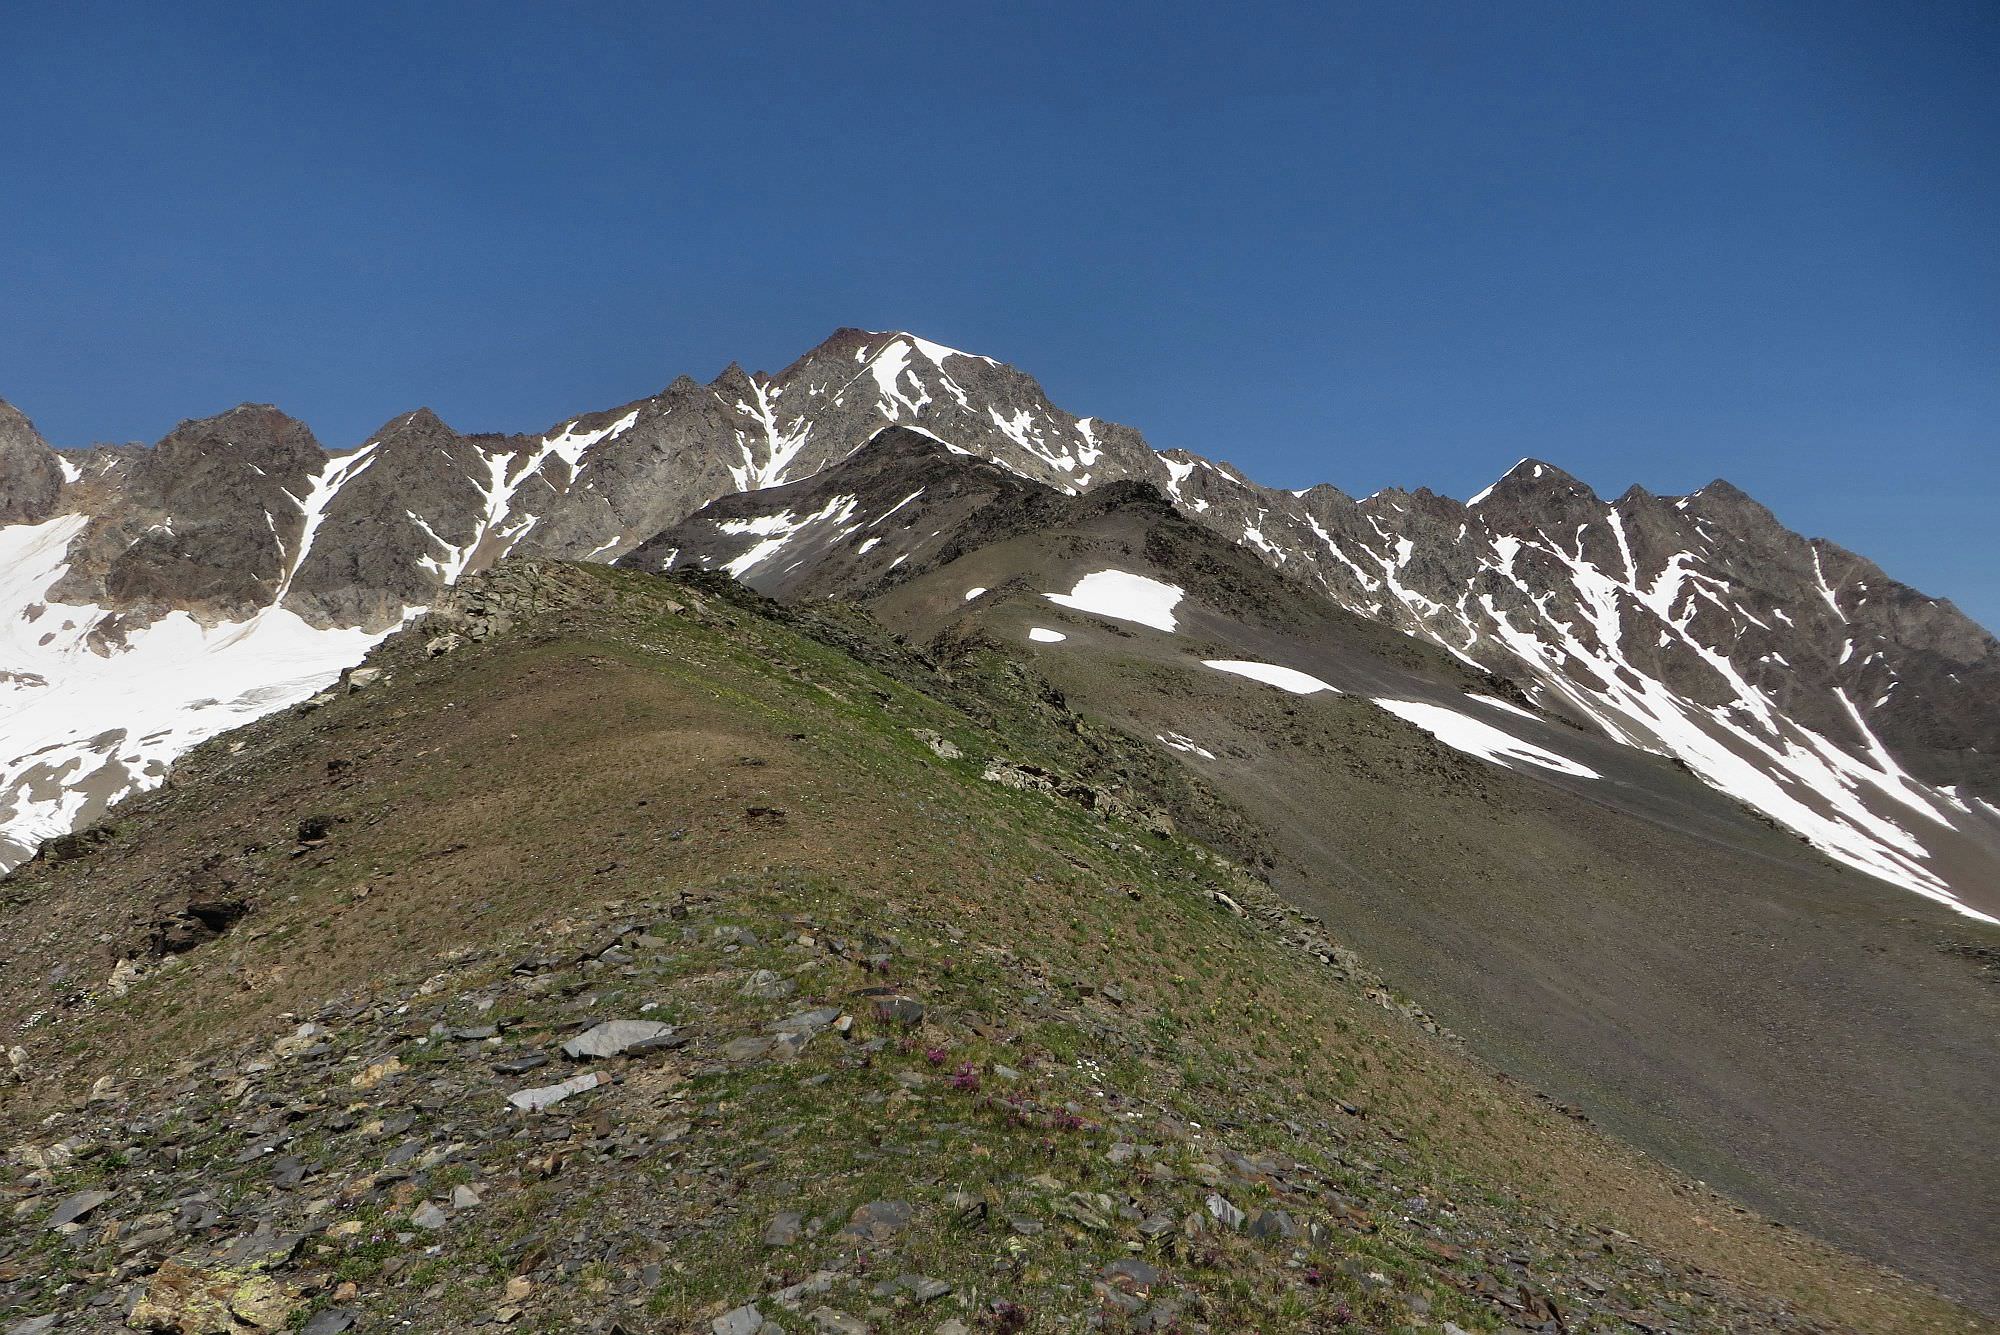 Chkhuti ridge behind three cairns